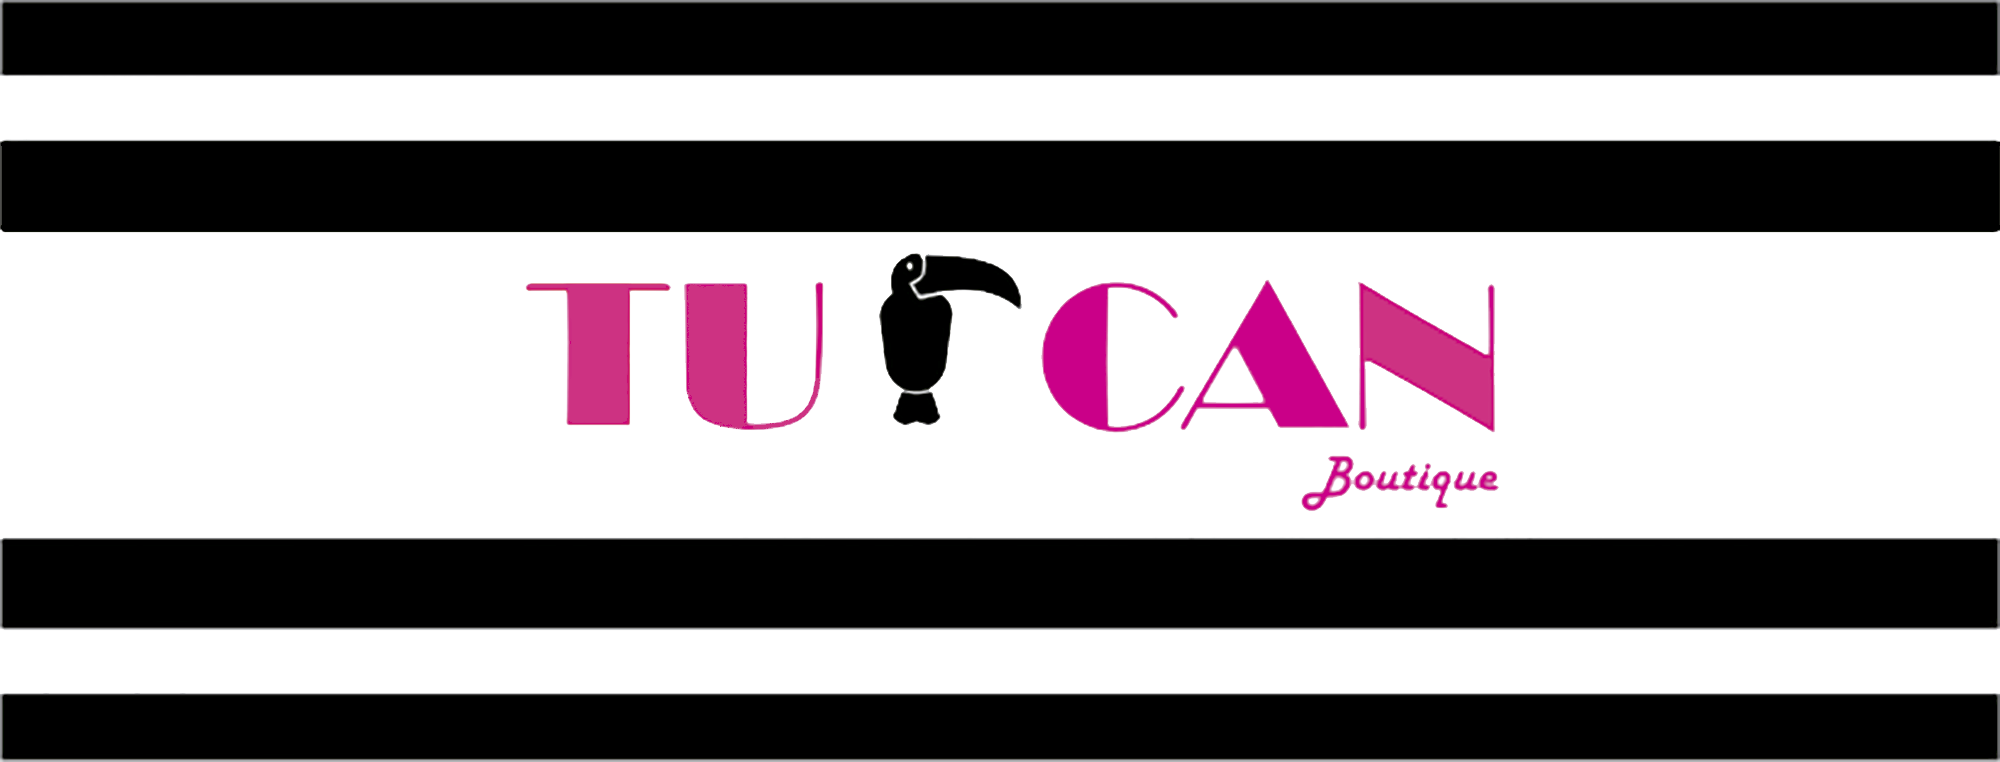 Tucan Boutique - Graphic Design (2000x762), Png Download